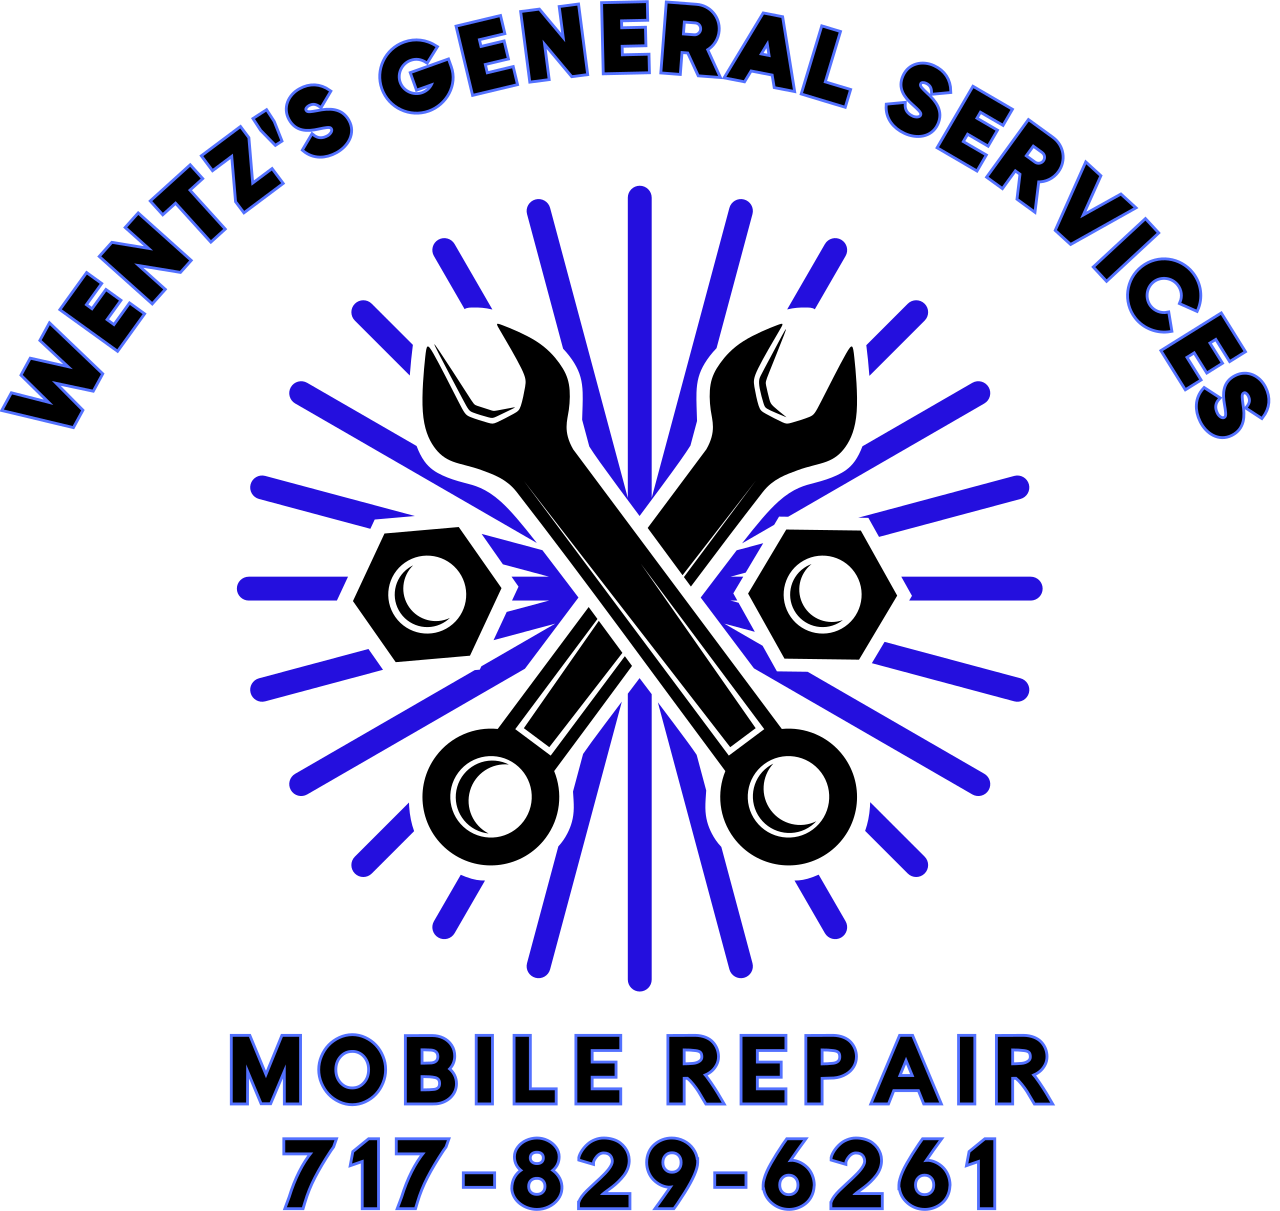 WENTZ'S GENERAL SERVICES's web page